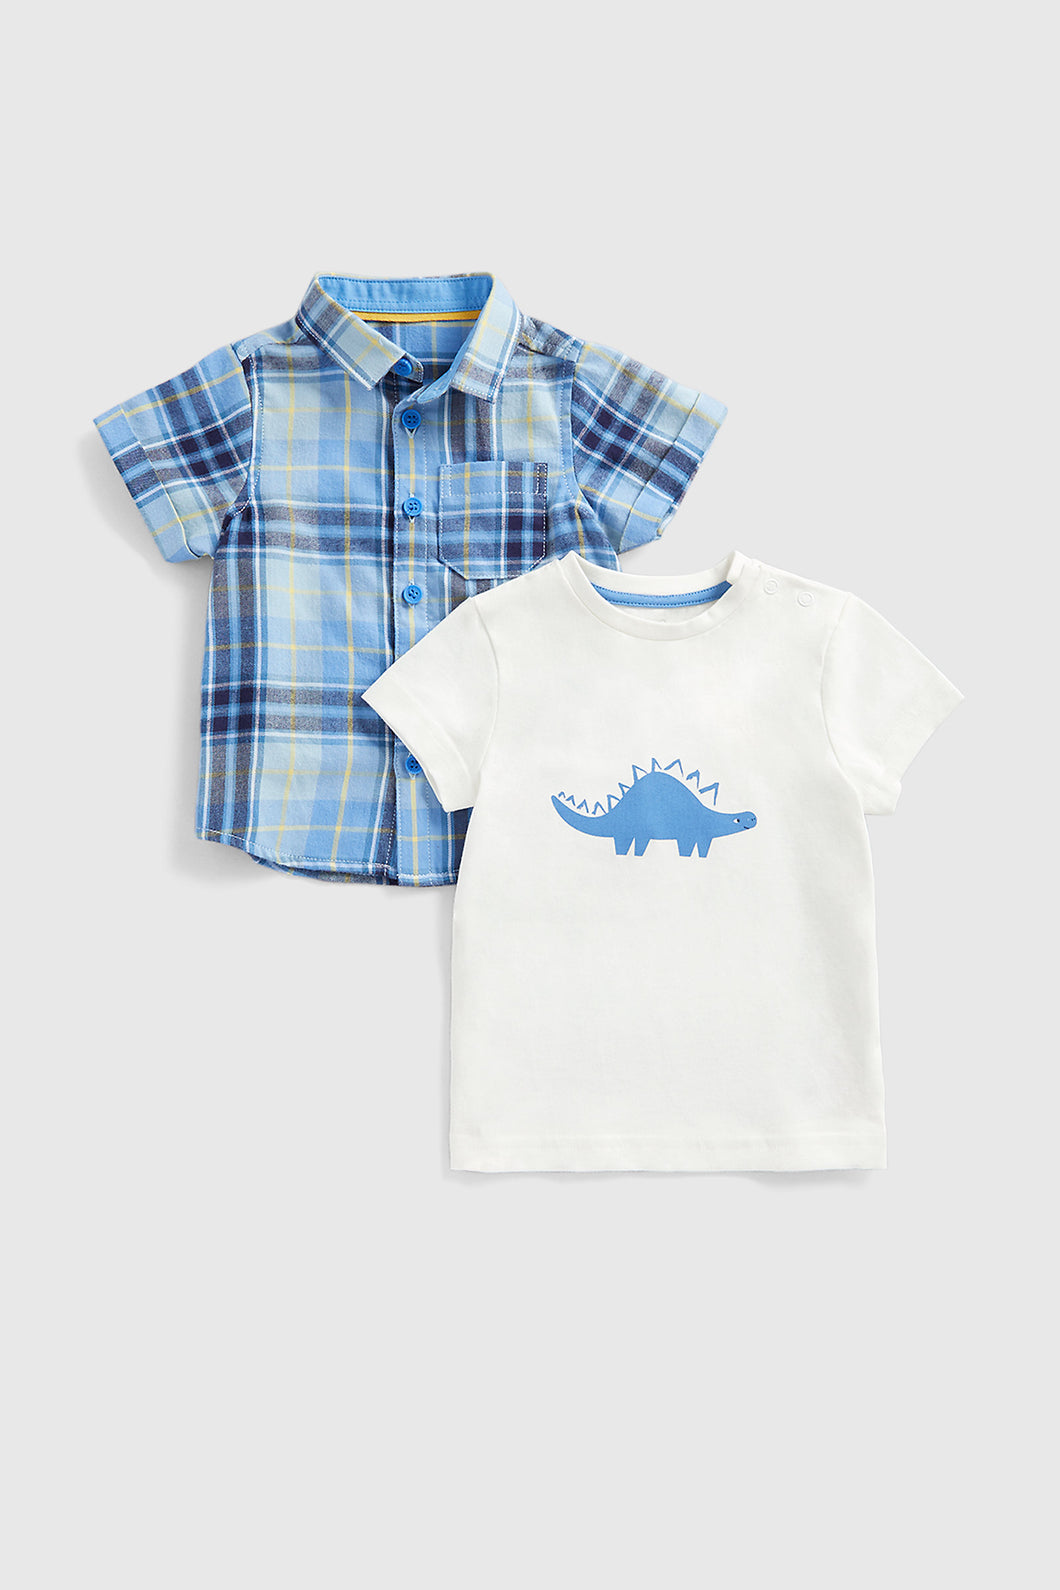 Mothercare Shirt and Dinosaur T-Shirt Set